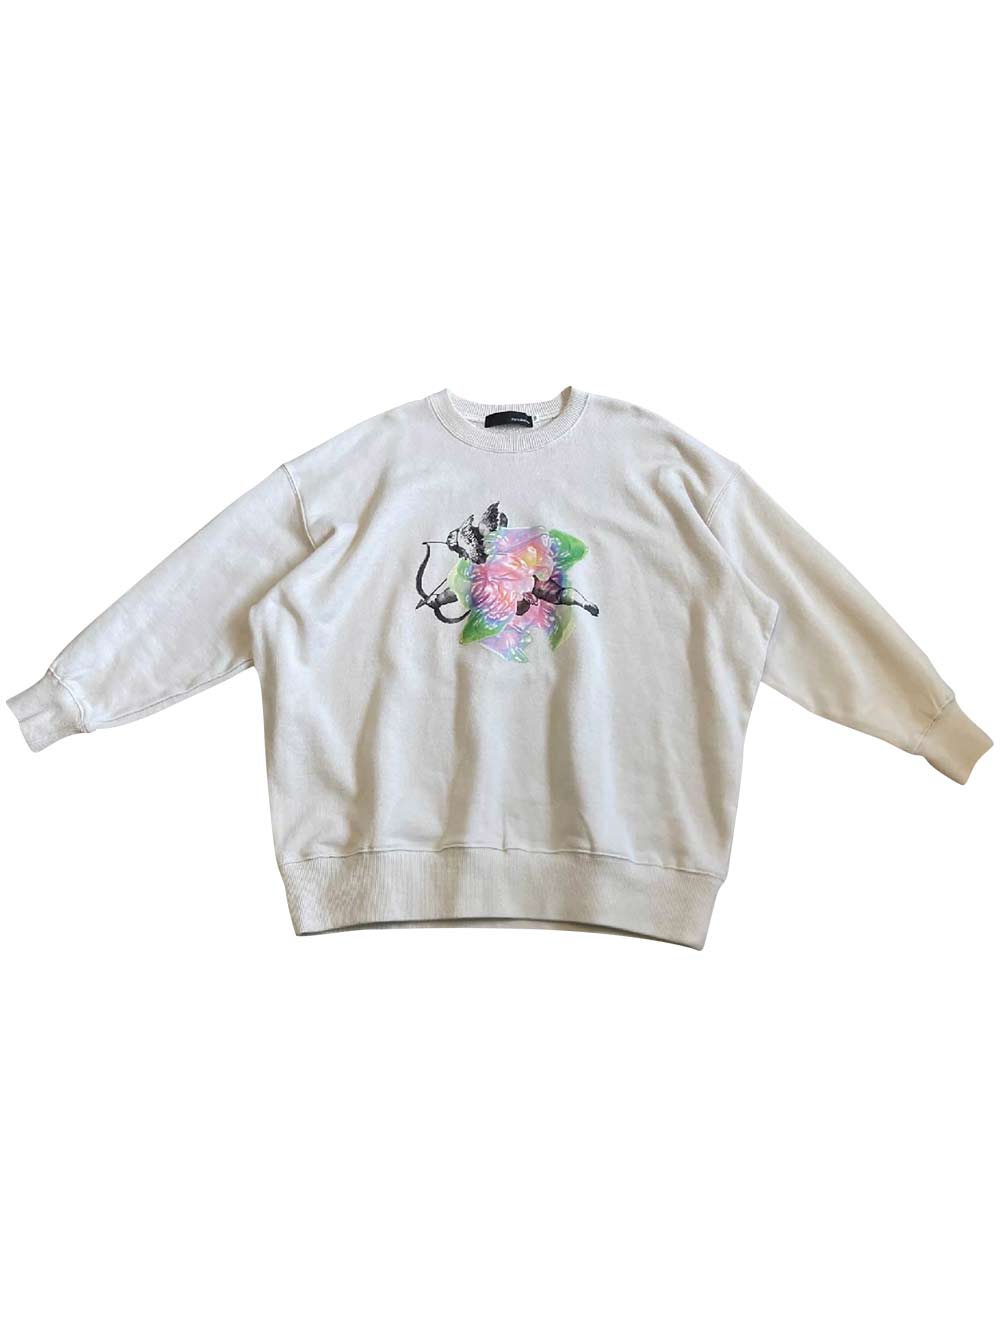 PREORDER: Butterfly Warrior Sweatshirt